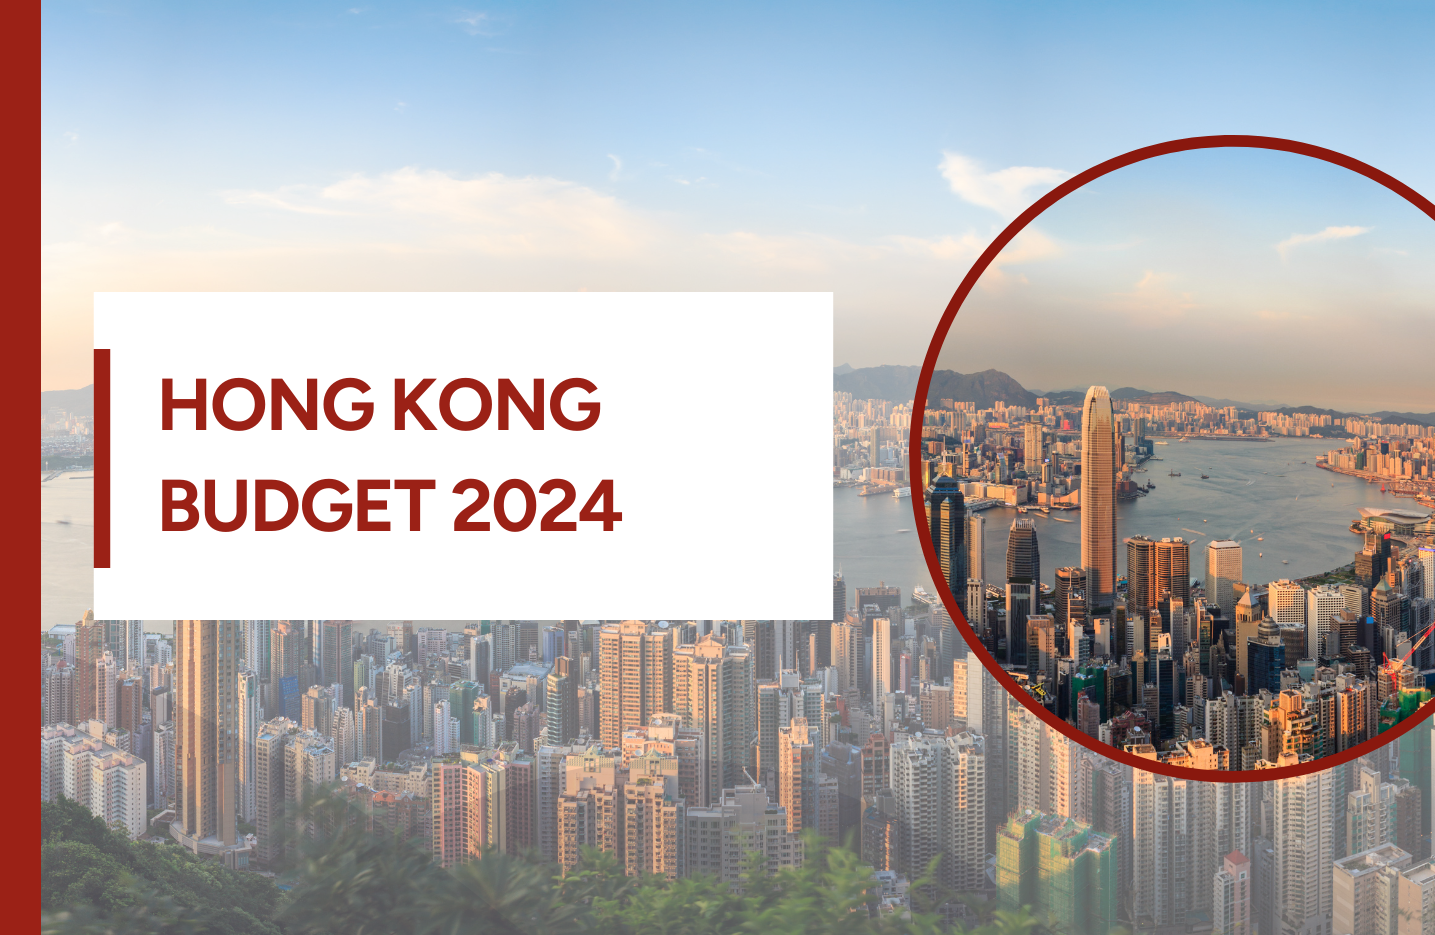 Hong Kong Budget 2024: Providing companies with new chances